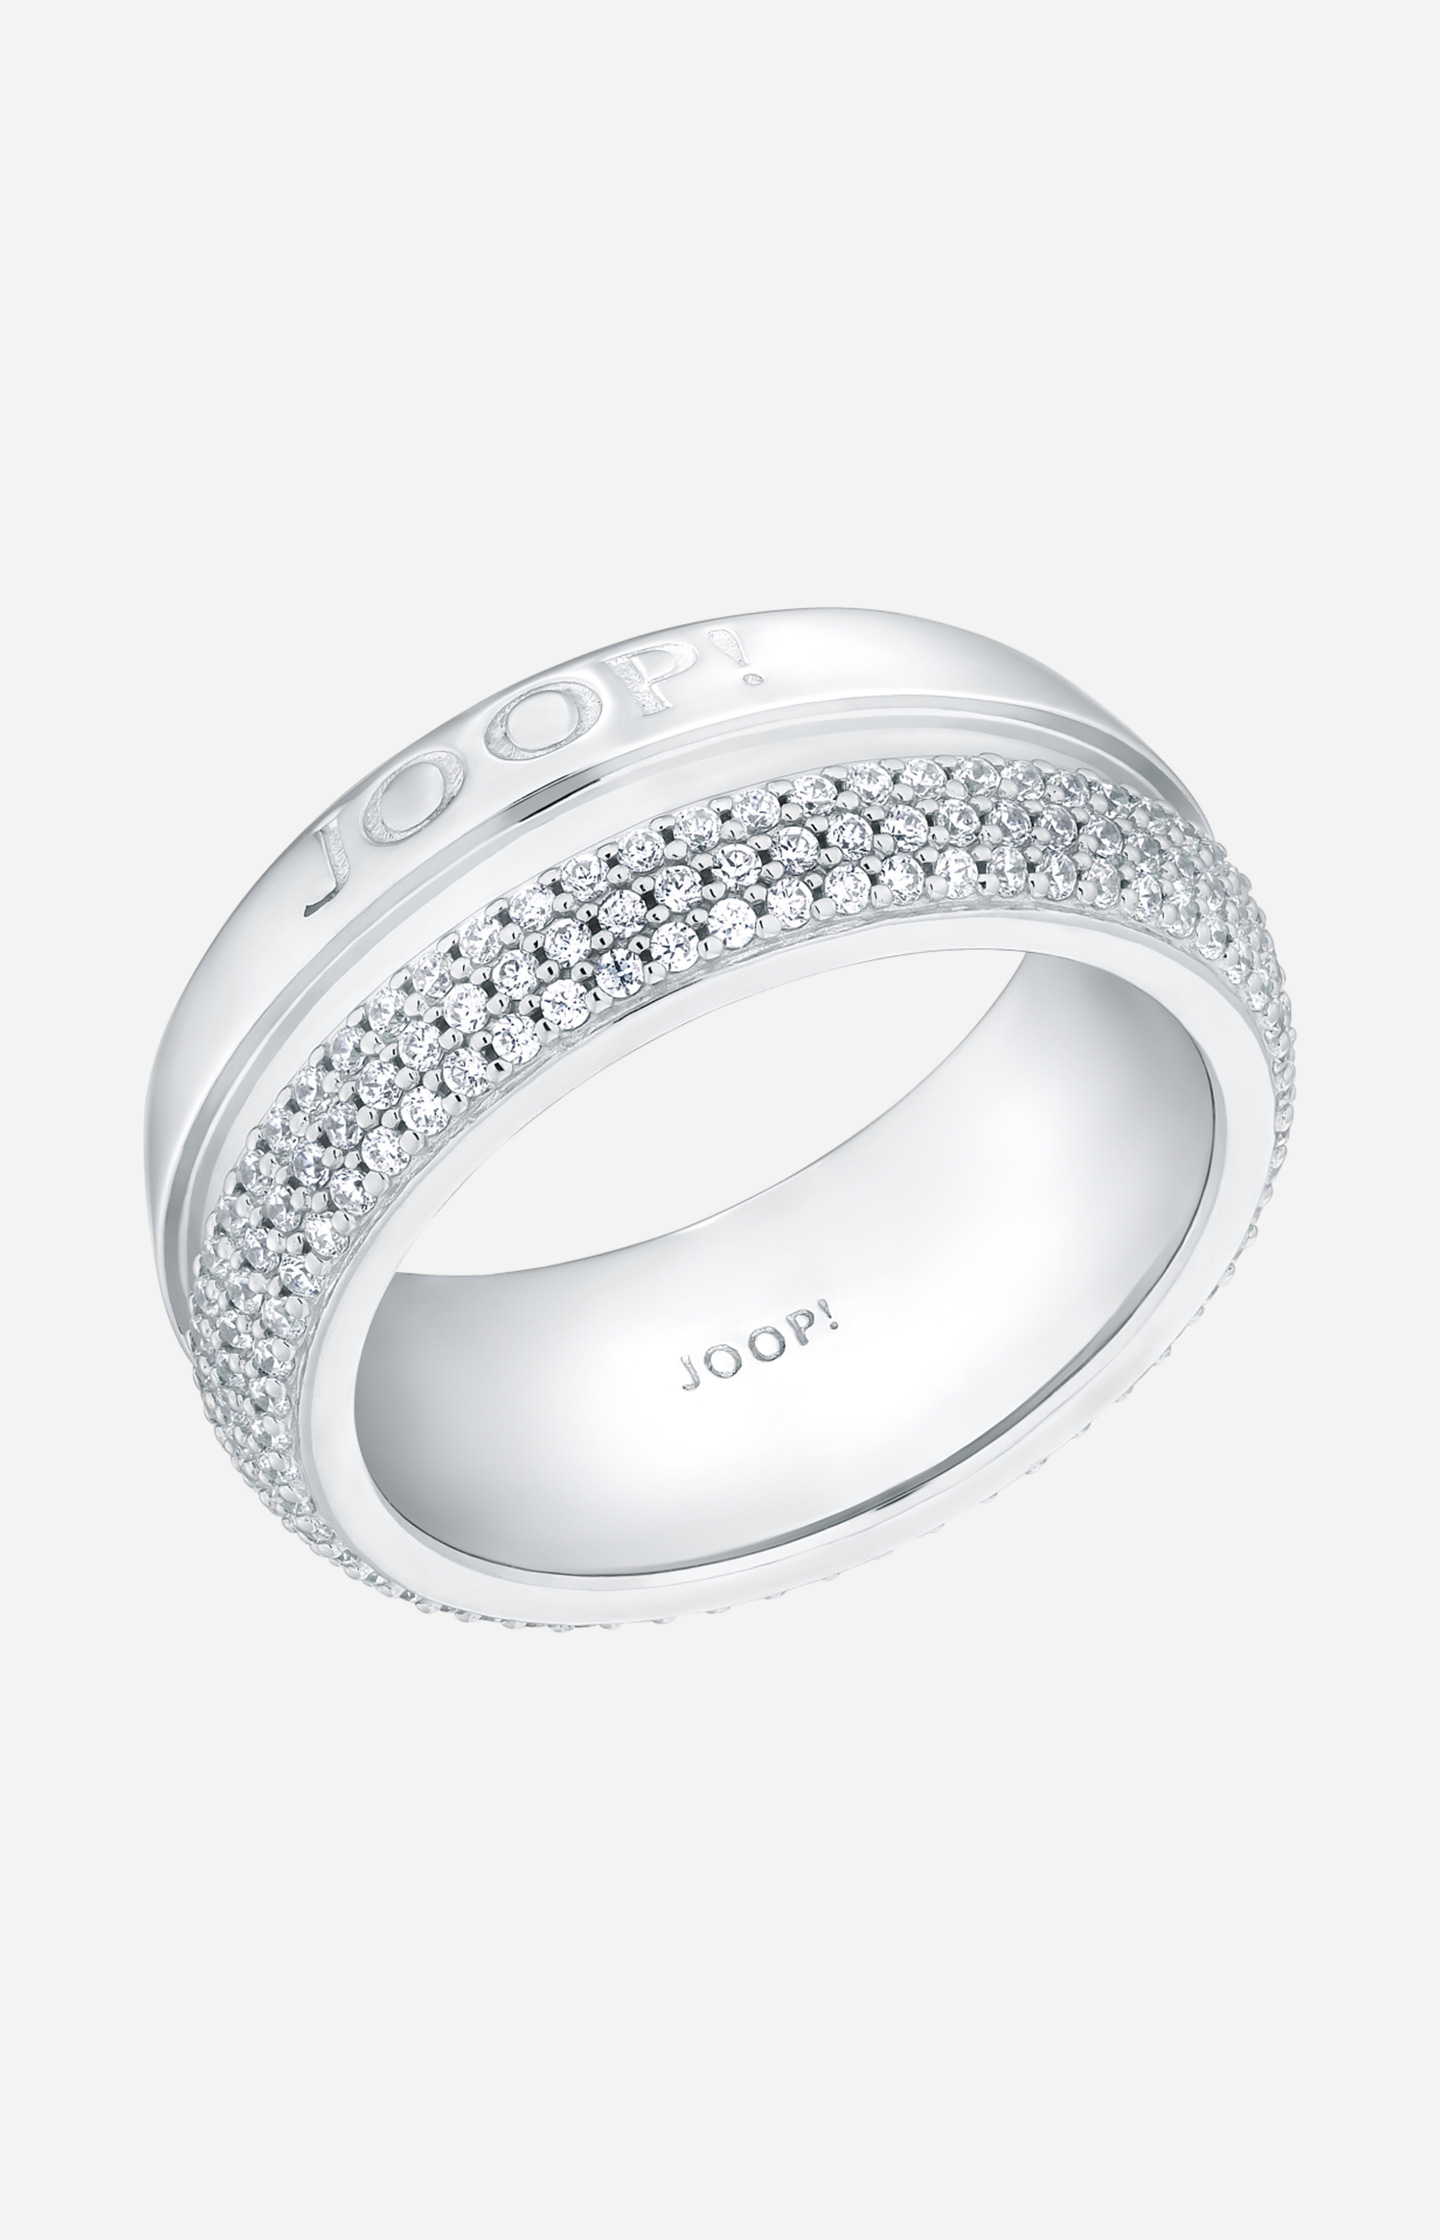 Ring in Silver - in JOOP! Shop the Online